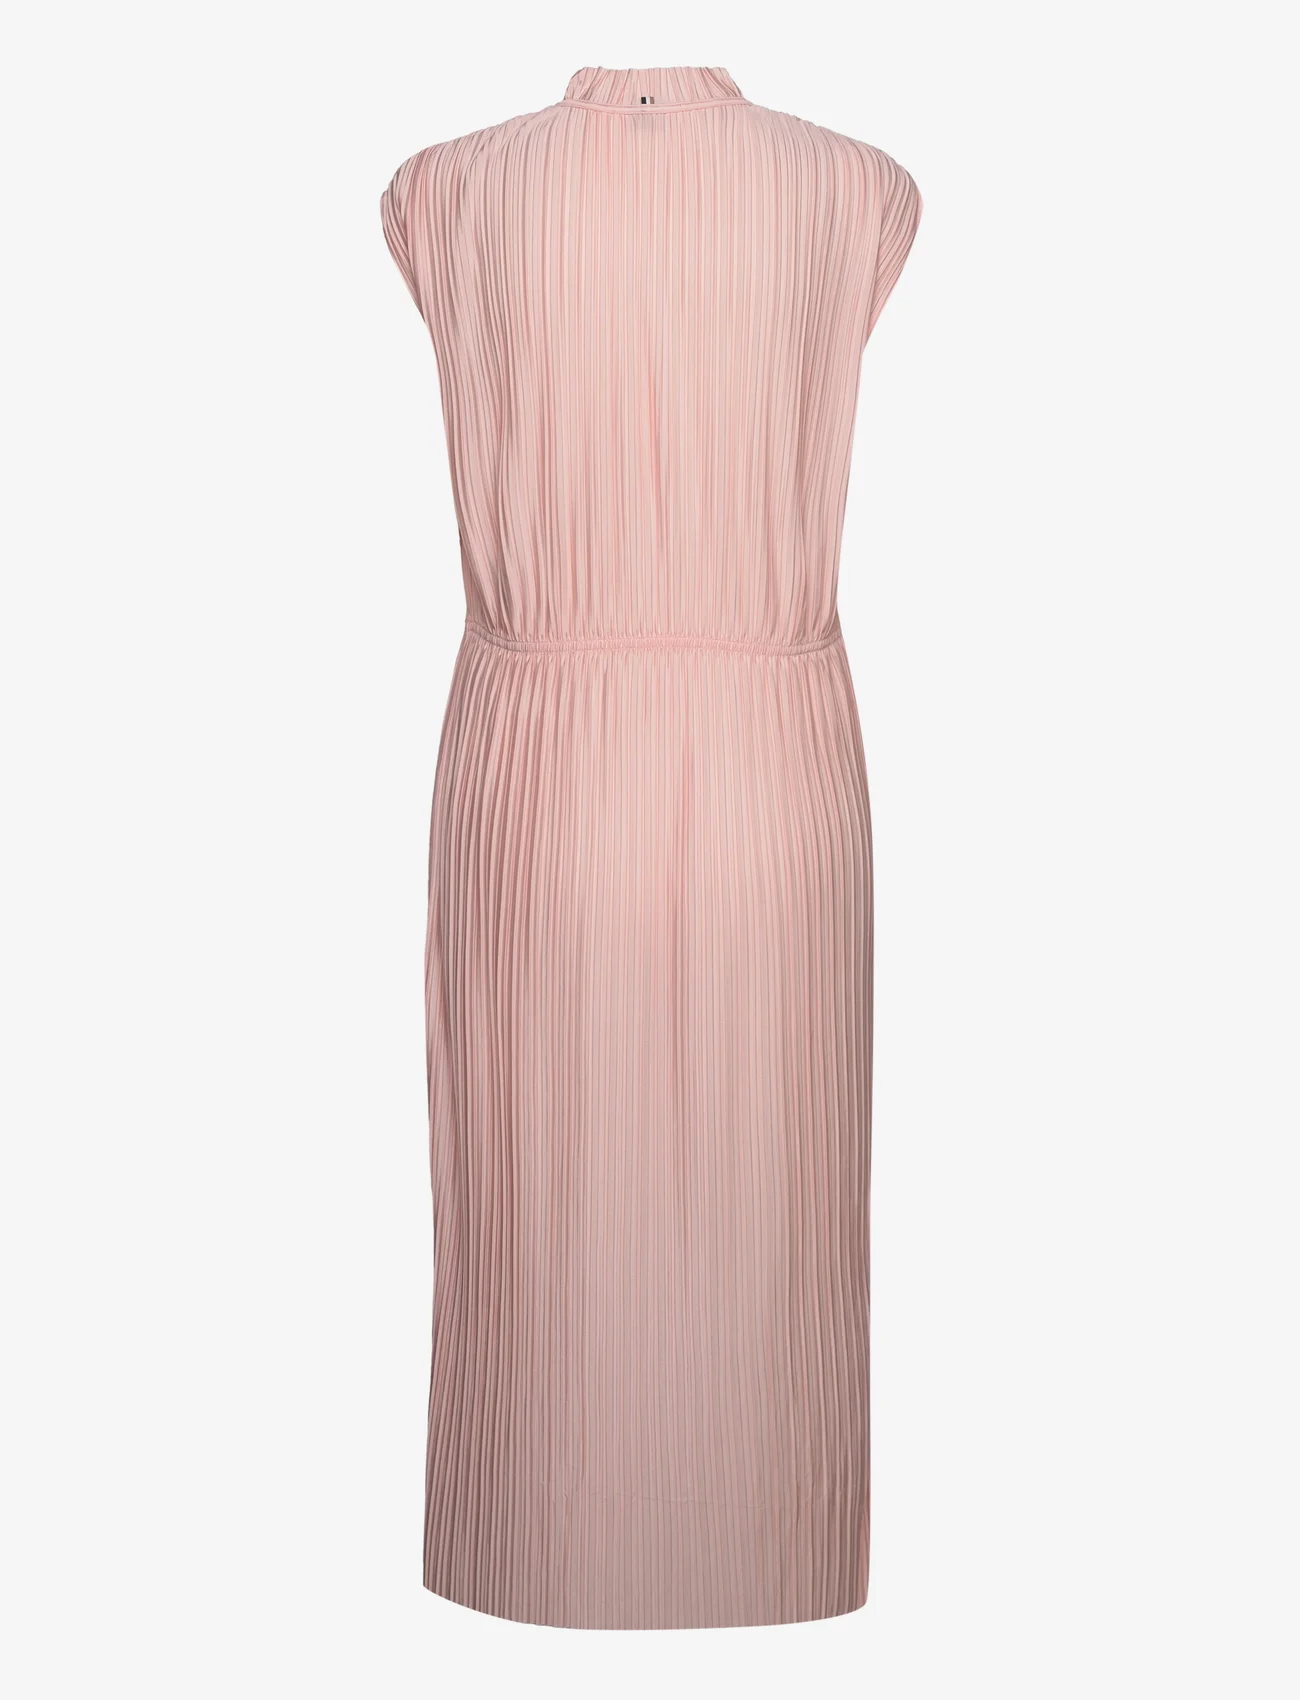 BOSS - Emals - ballīšu apģērbs par outlet cenām - bright pink - 1